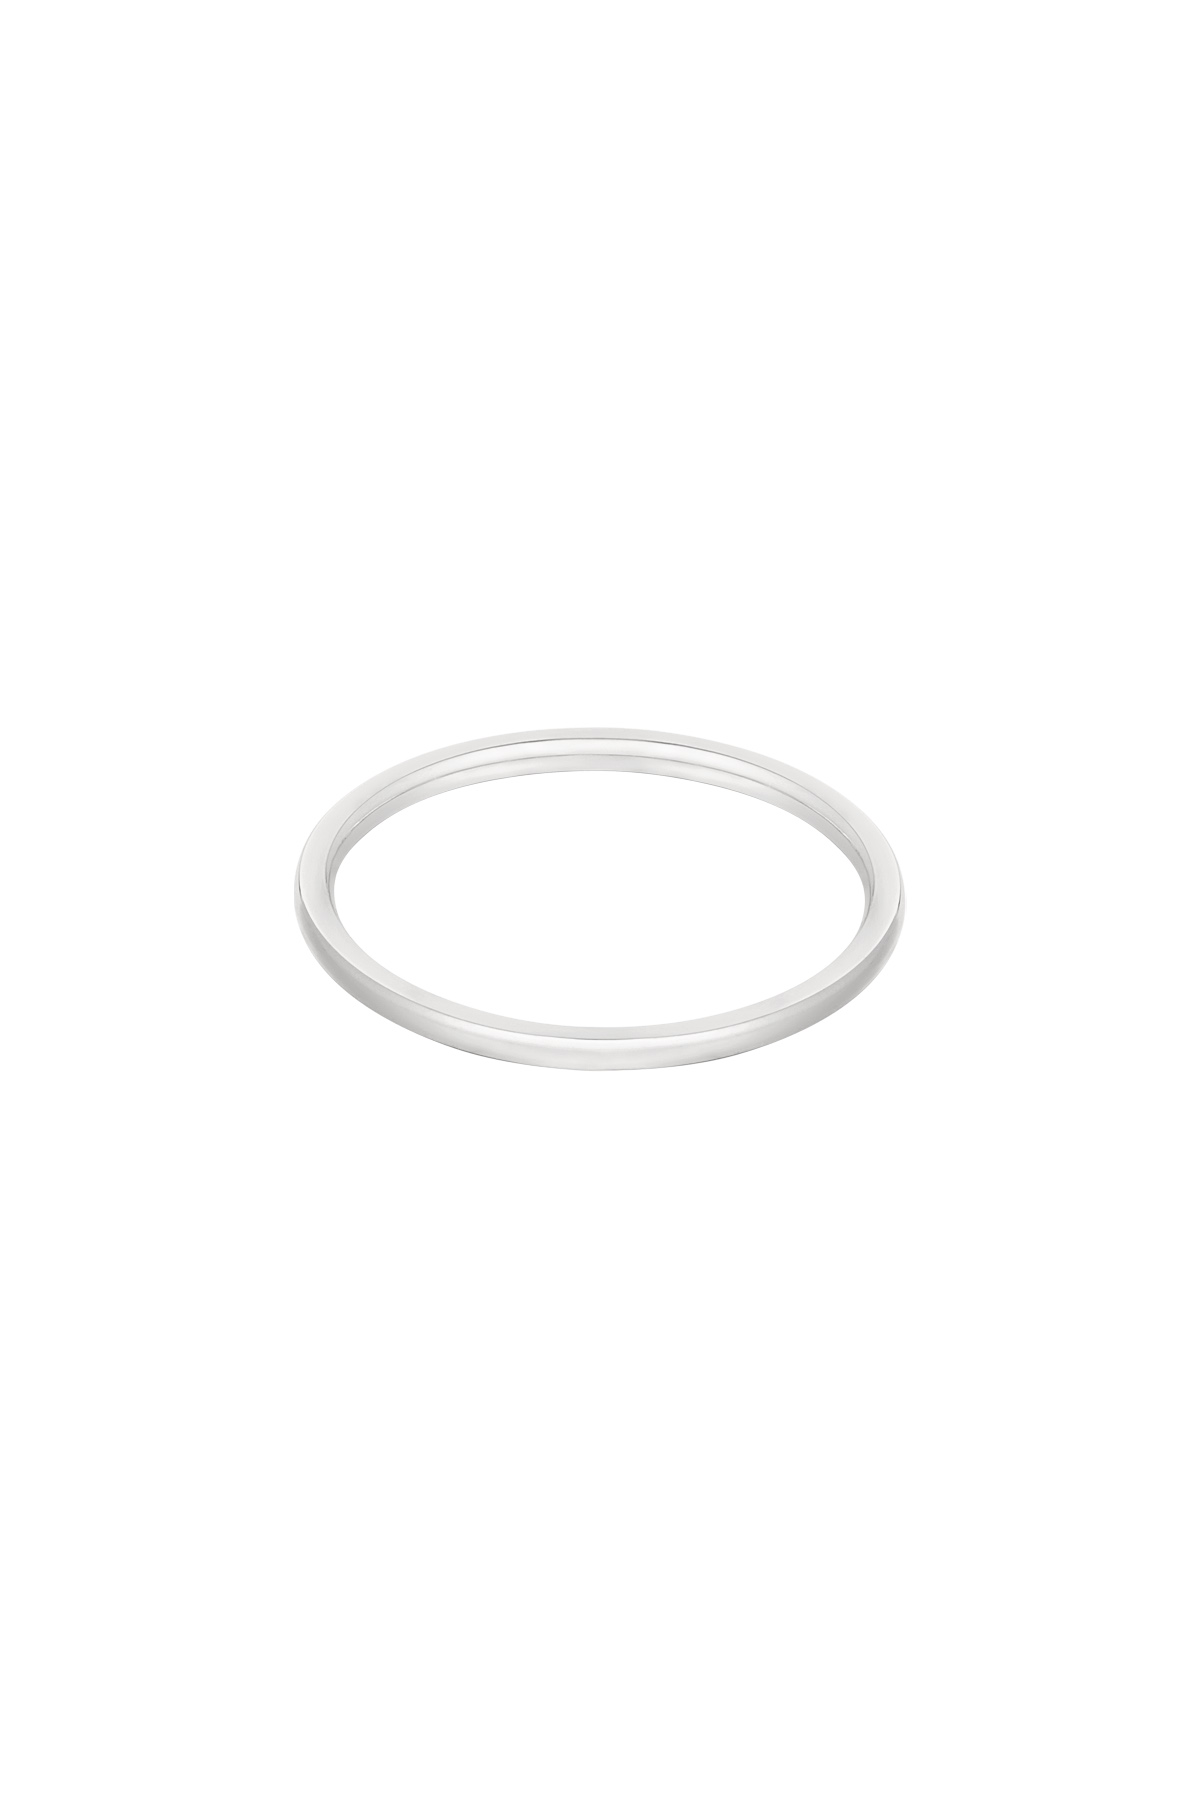 Ring minimalist - silver h5 